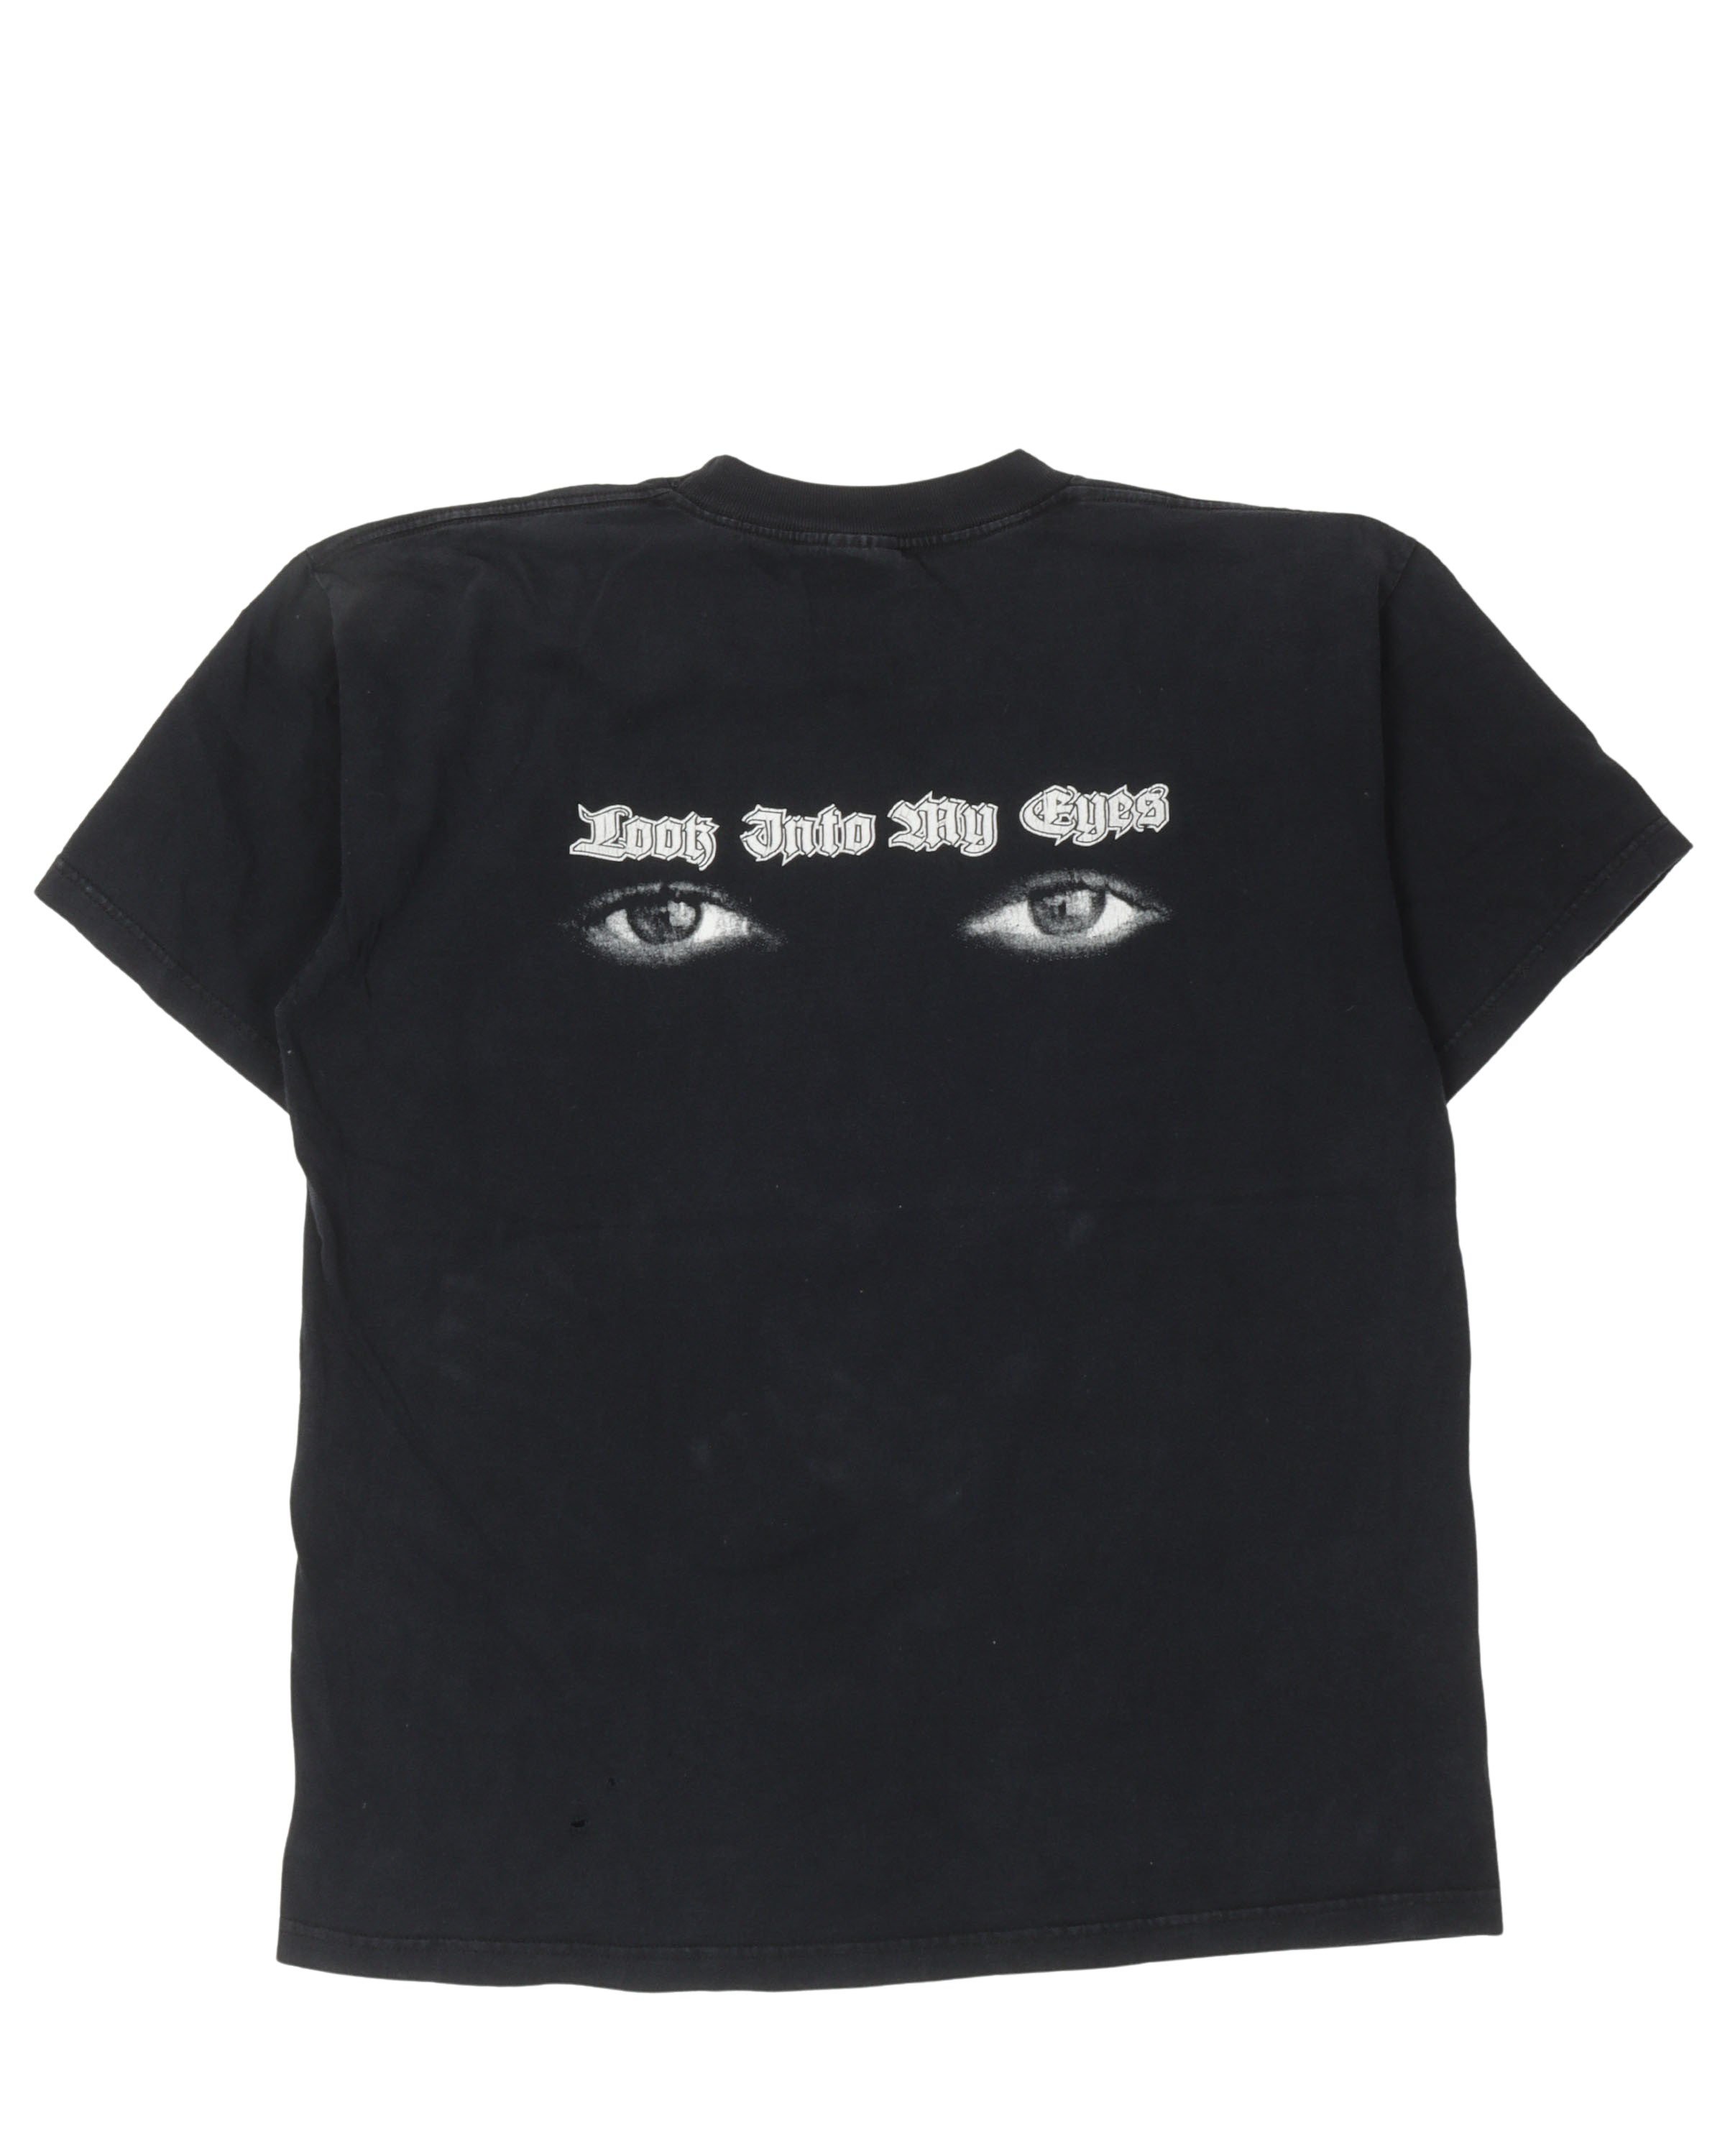 Bone Thugs N' Harmony Art of War T-Shirt